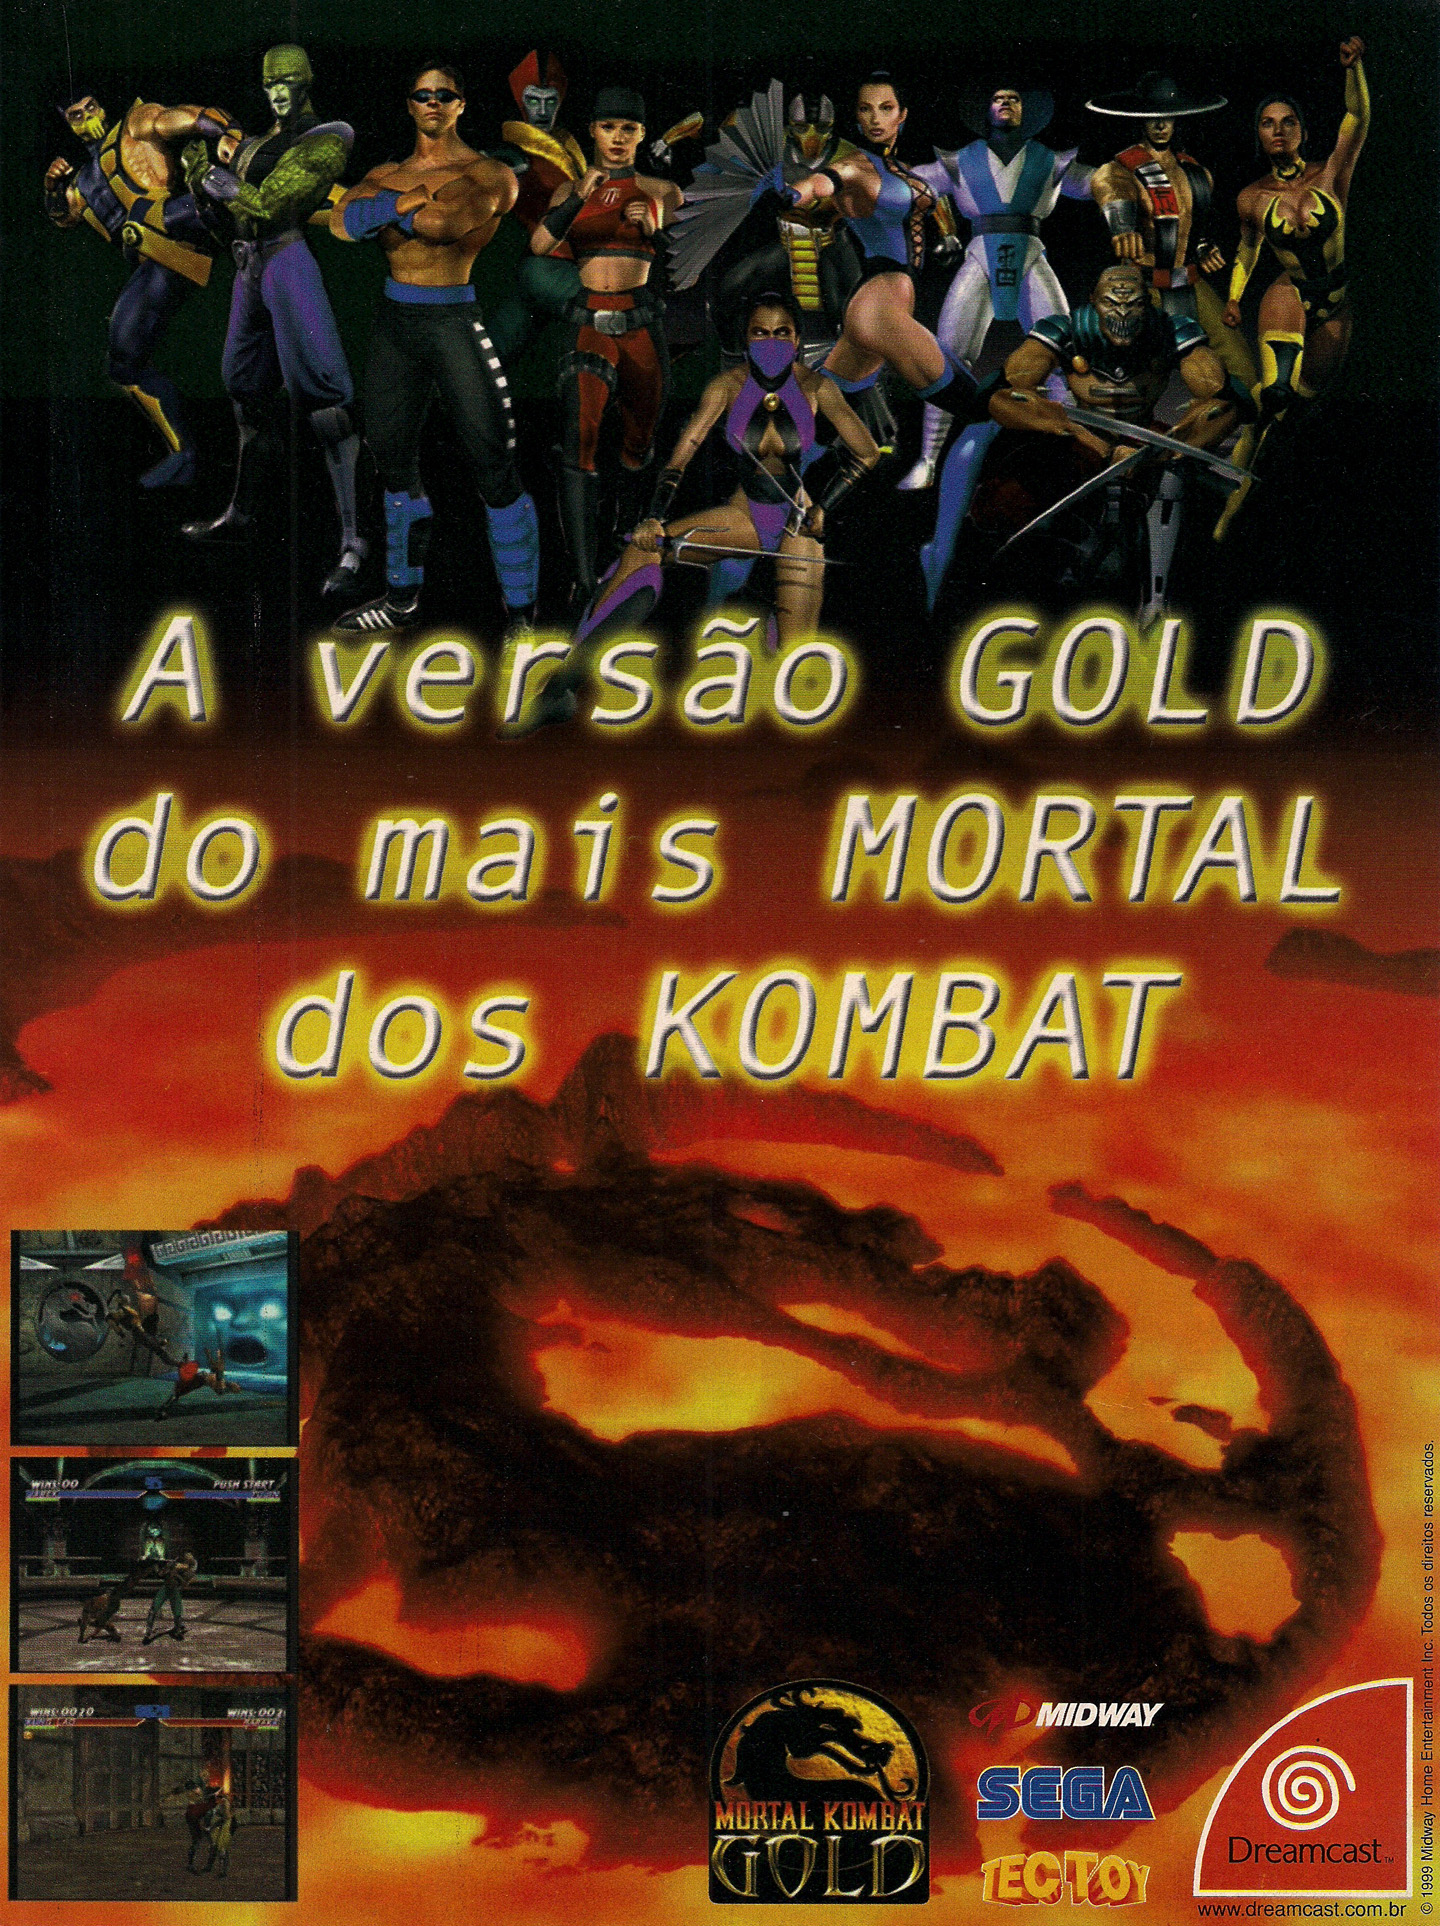 Mortal Kombat Gold, Mortal Kombat Wiki